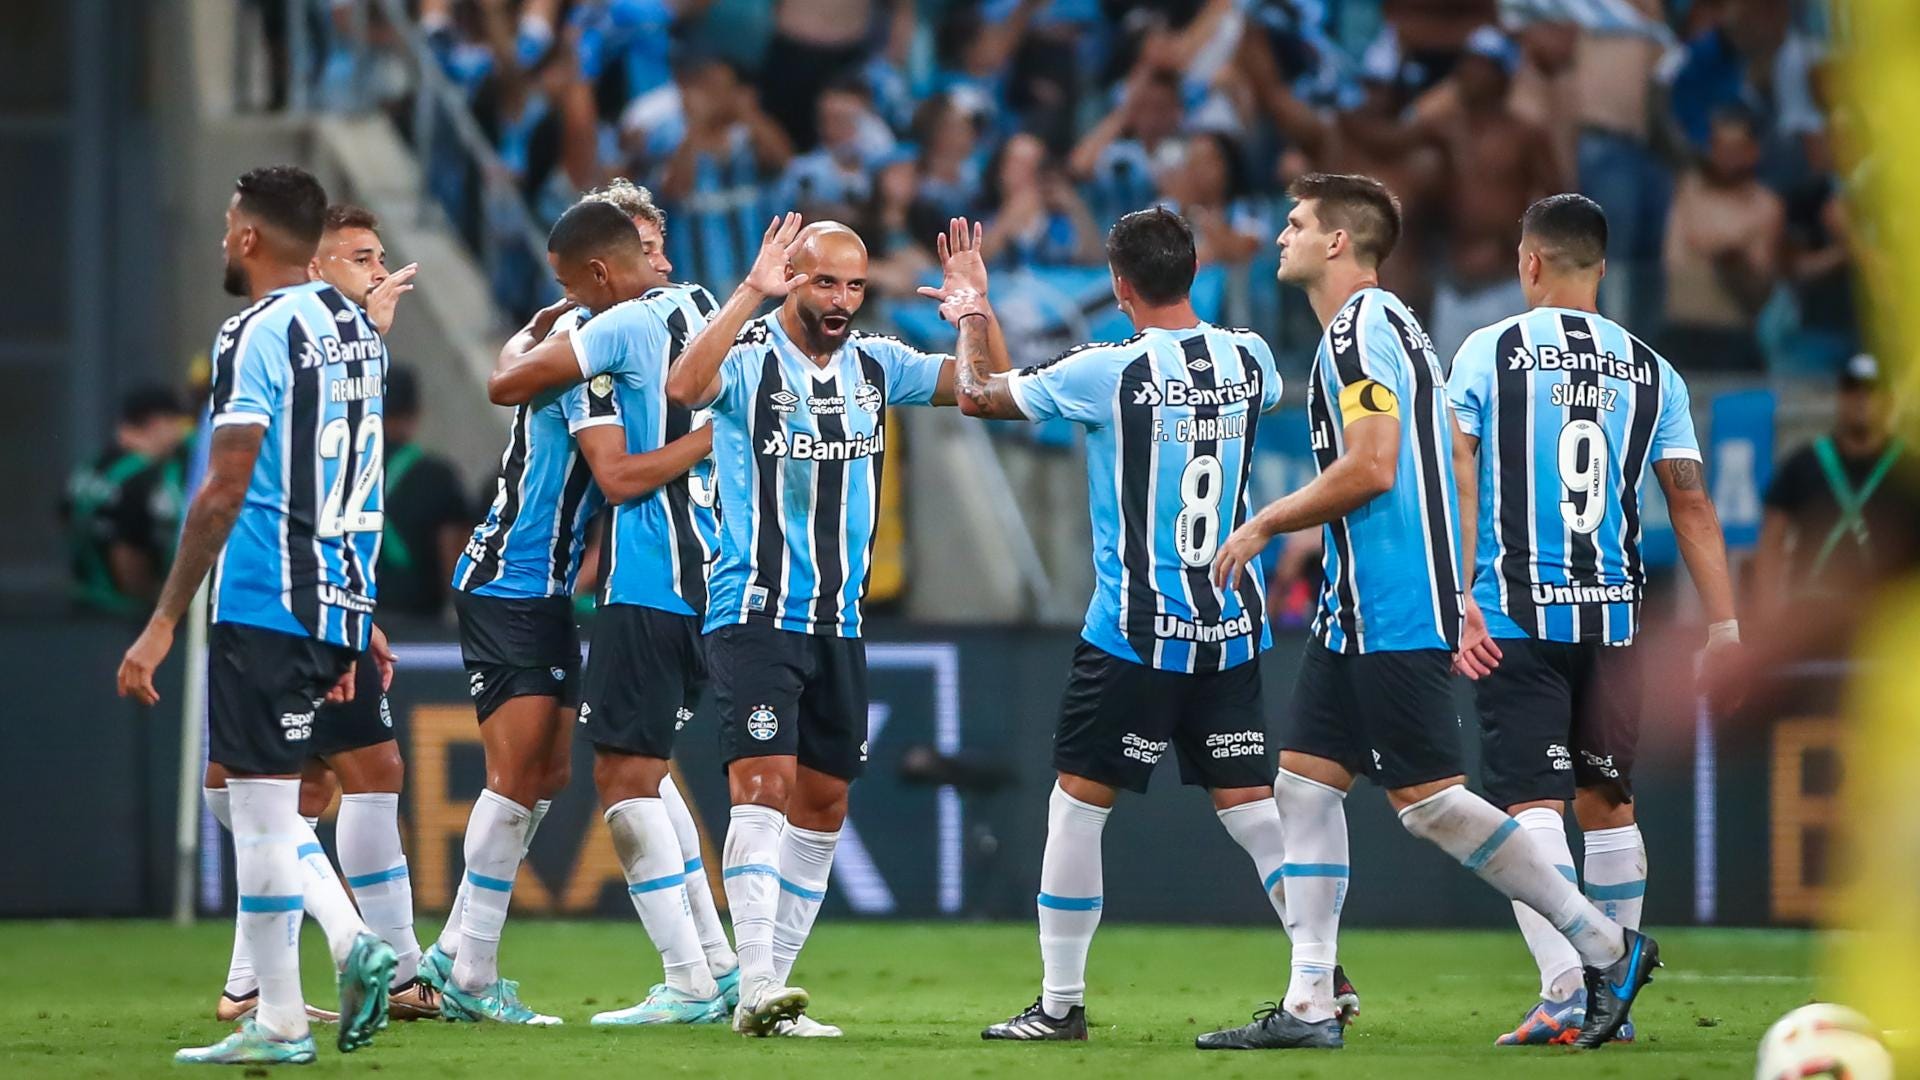 Grêmio vs Santos: An Intense Battle in Brazilian Football